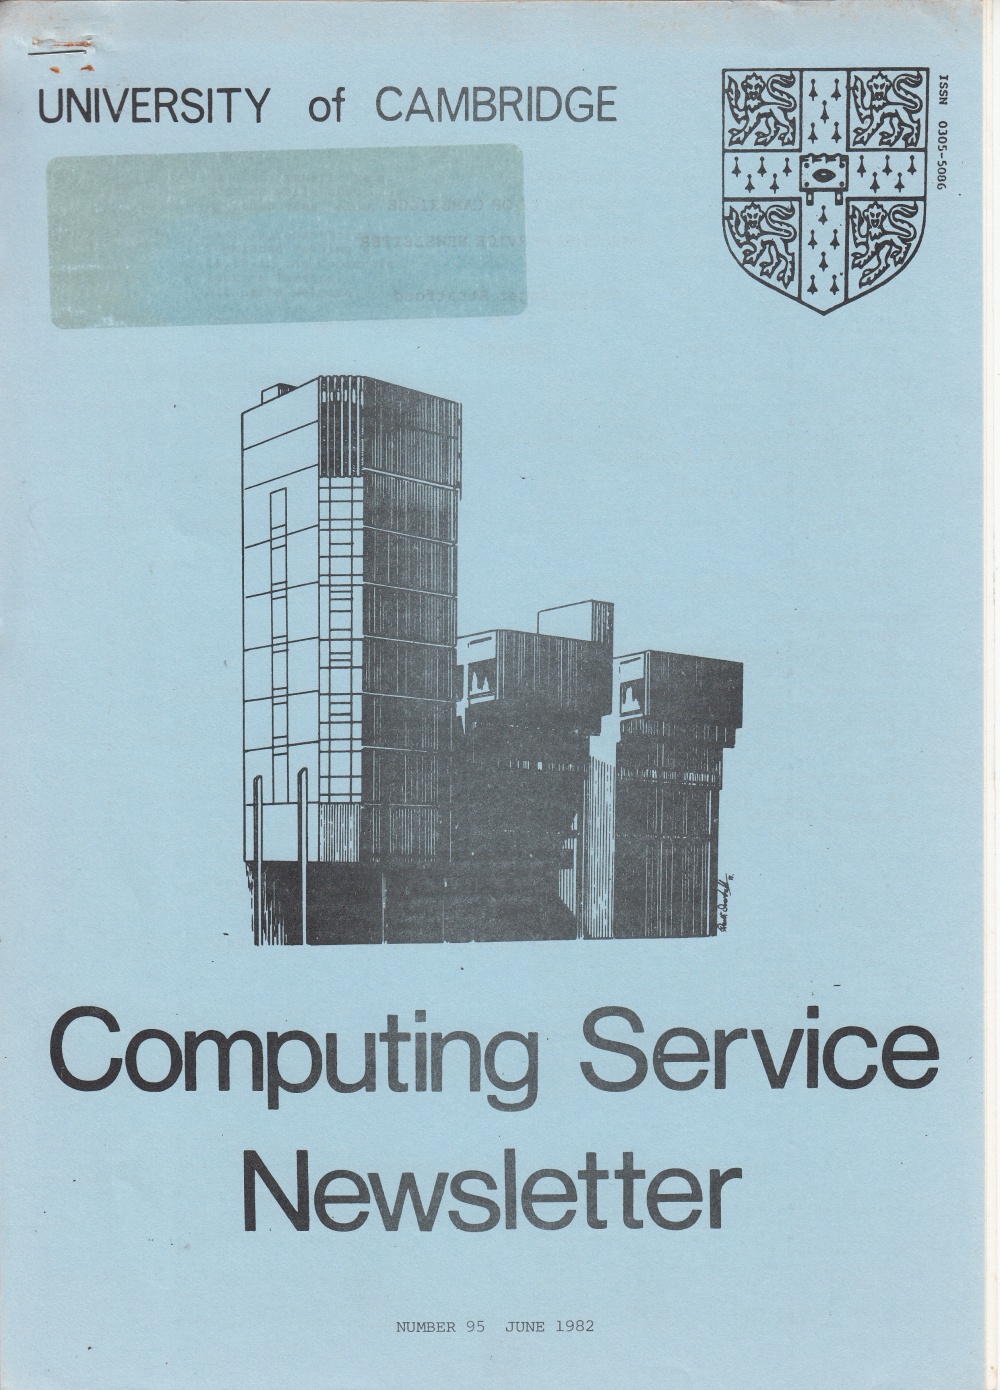 Article: University of Cambridge Computing Service June 1982 Newsletter 95